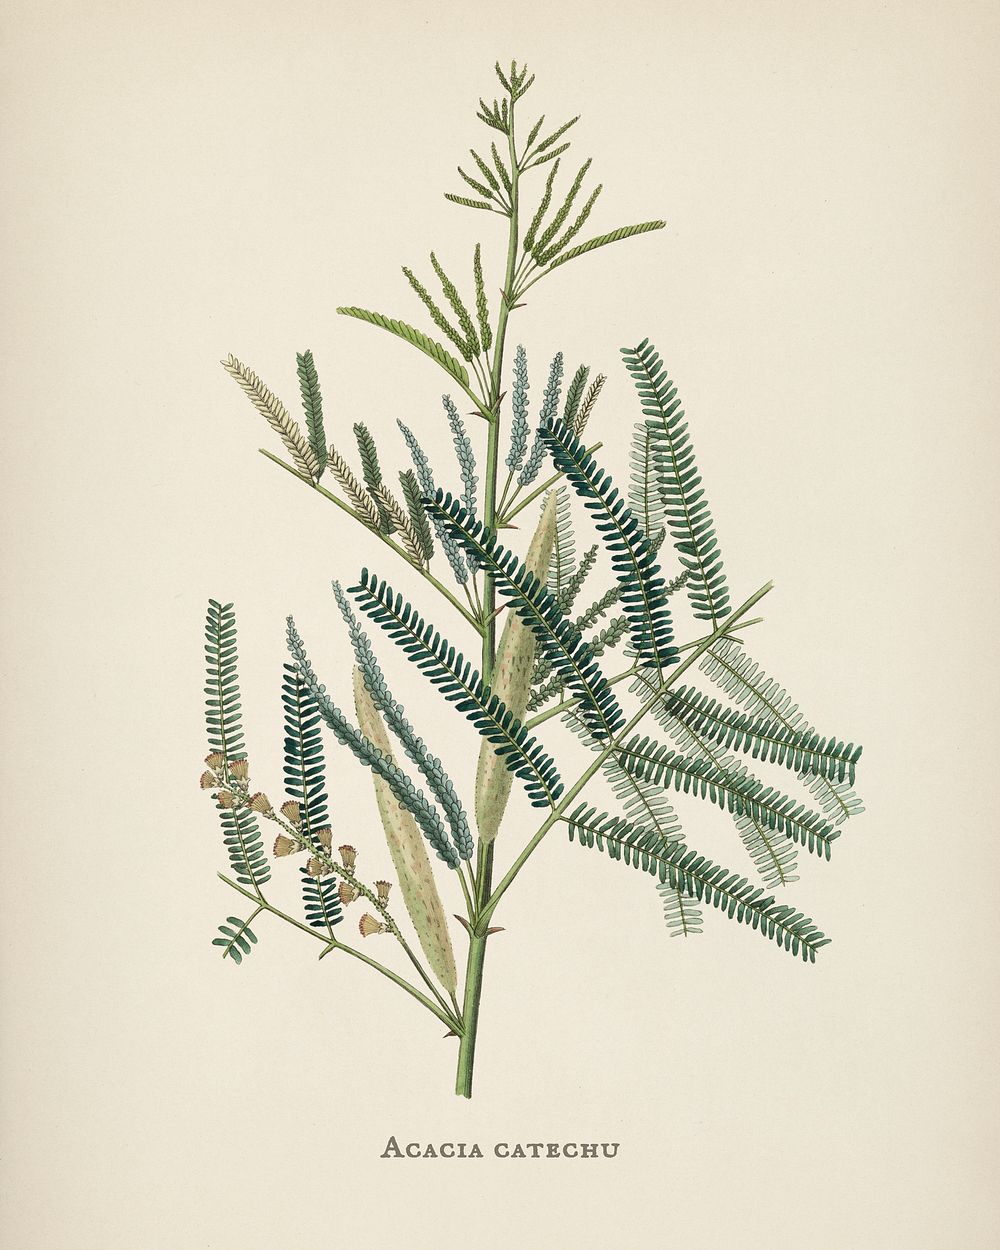 Mimosa catechu (Acacia catechu) illustration from Medical Botany (1836) by John Stephenson and James Morss Churchill.